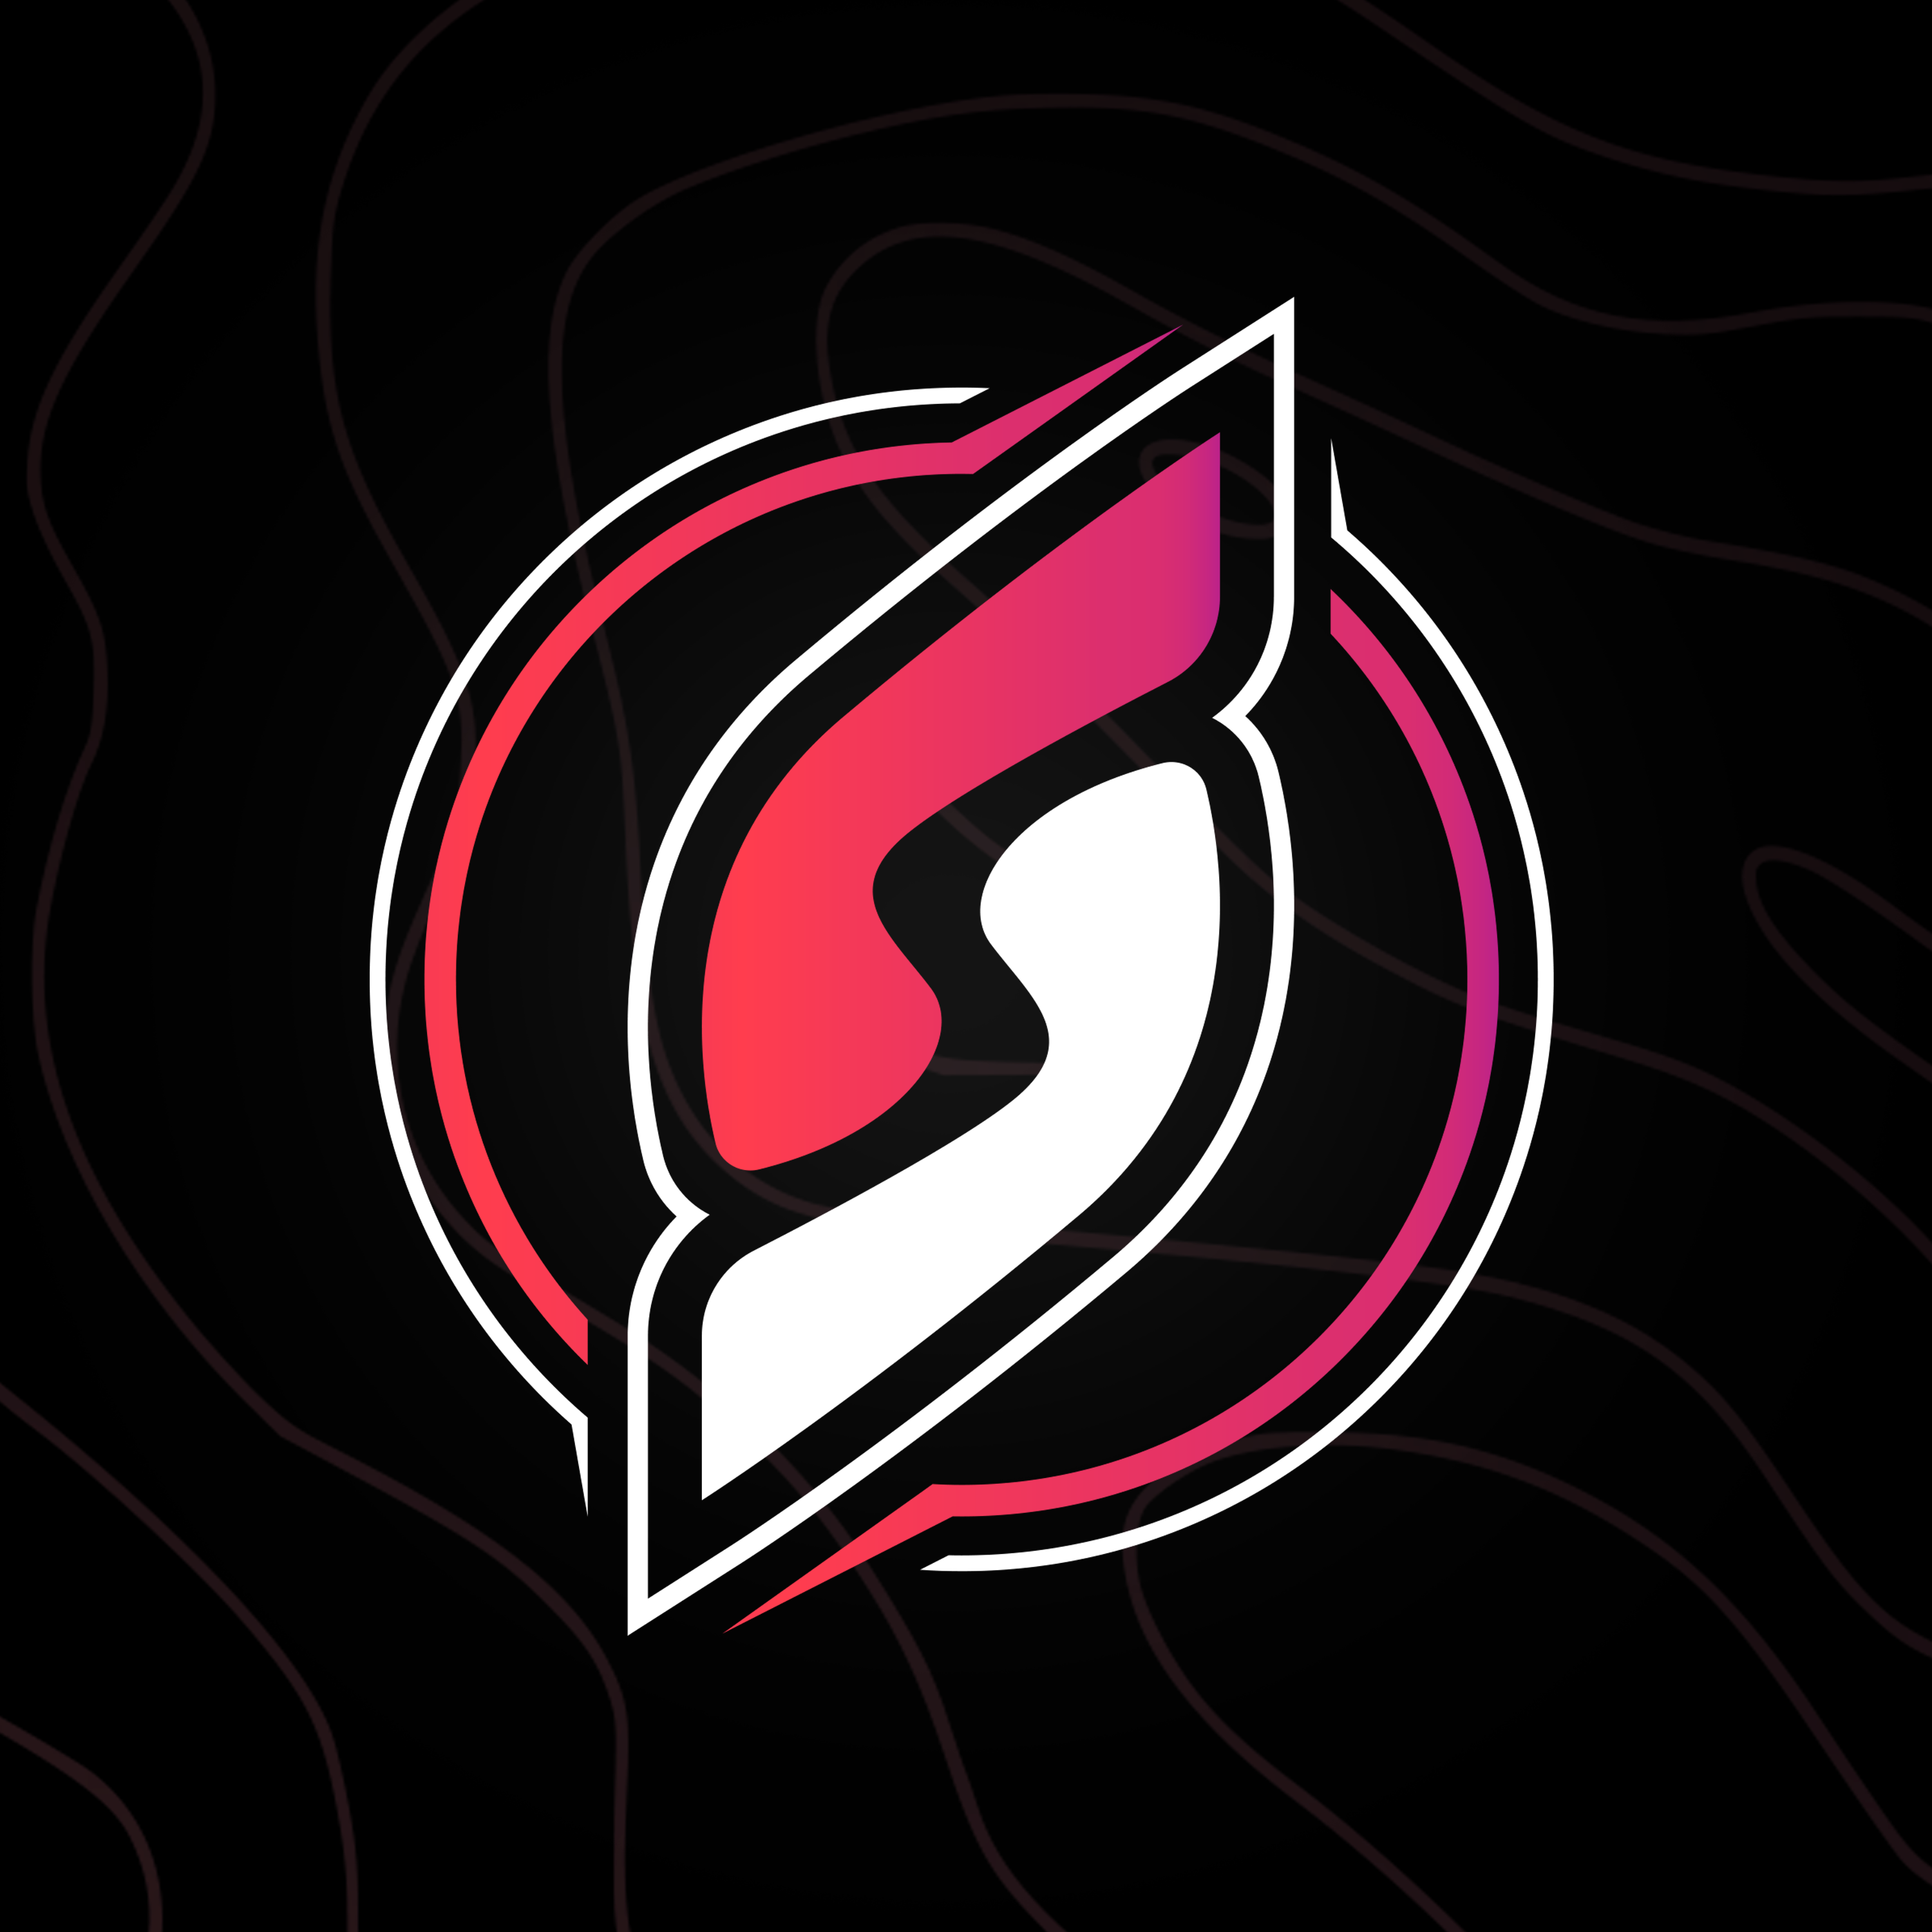 Sked Esport team logo